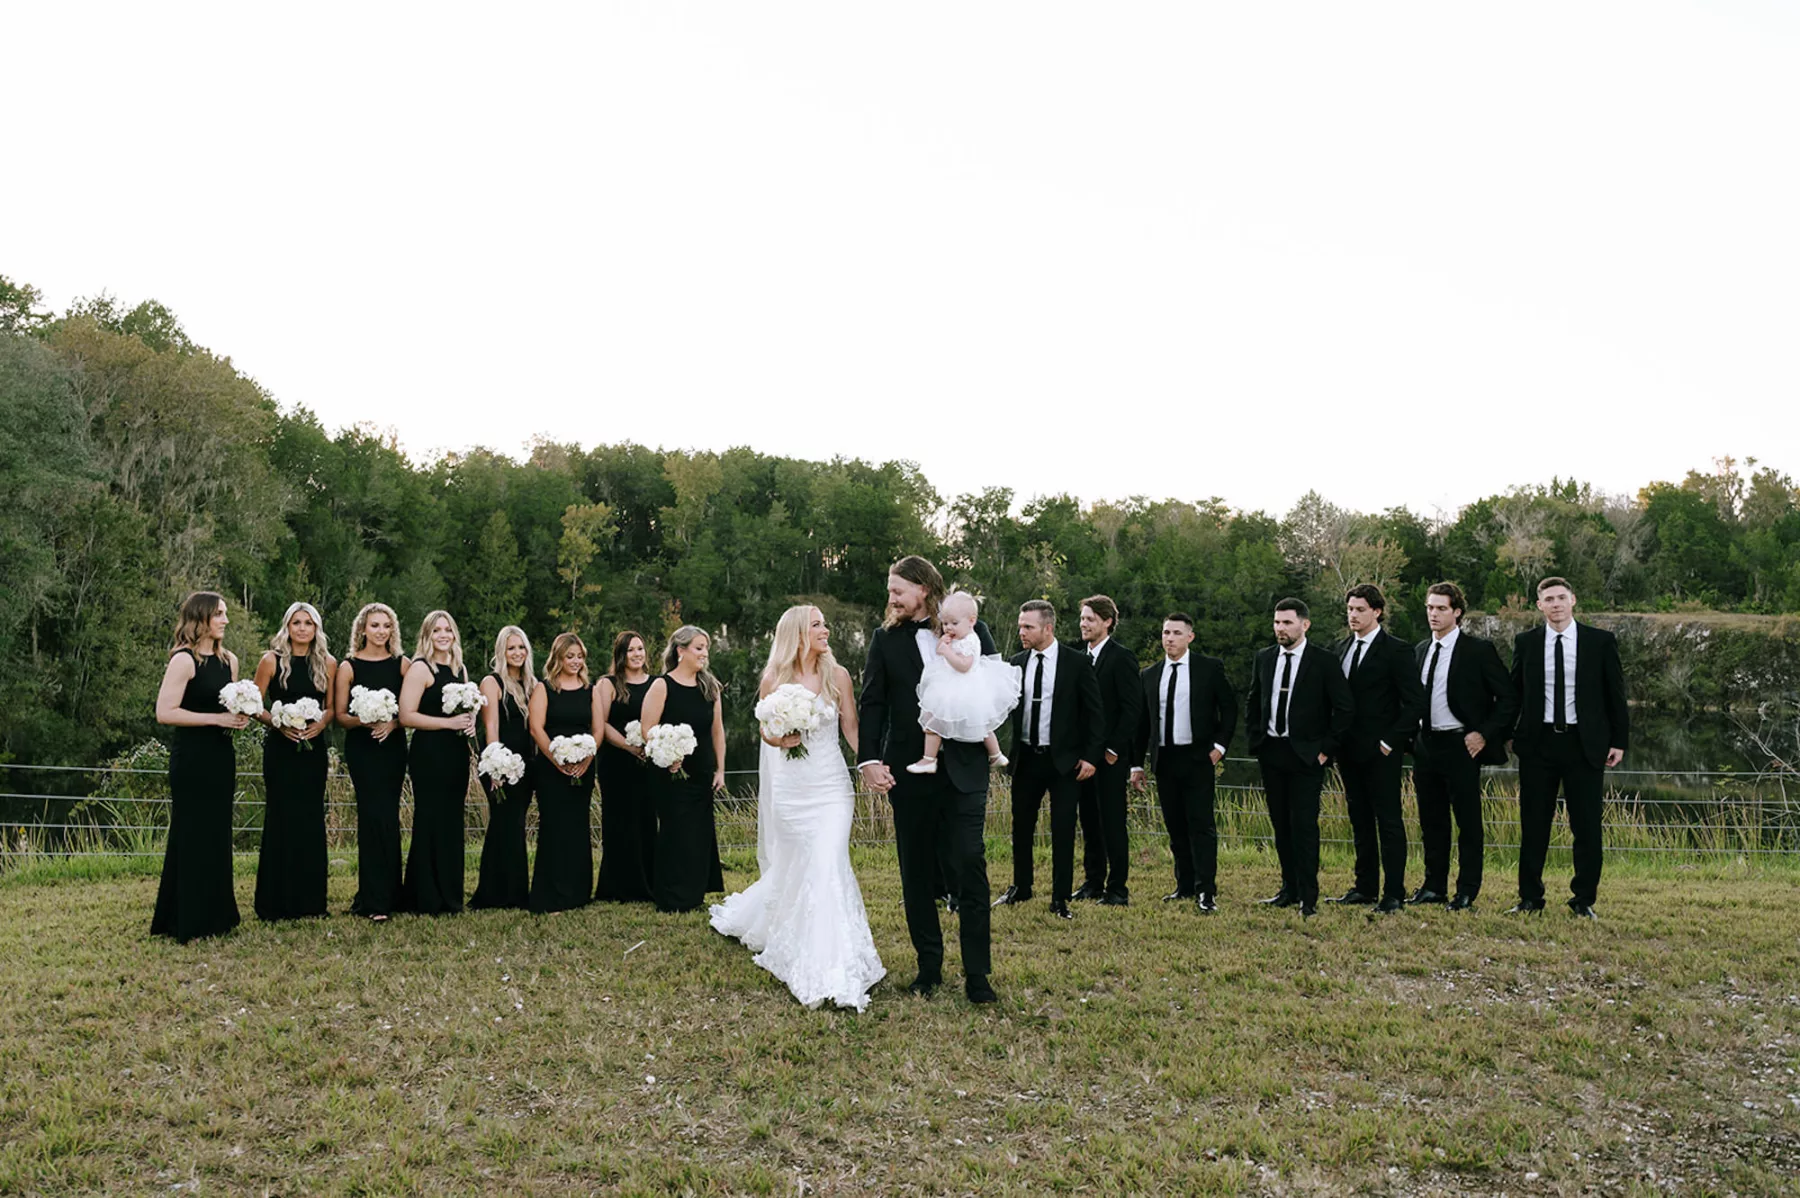 Bridal Party Wedding Attire Inspiration | Matching Black Bridesmaids Dresses | Black Groomsmen Suit and Tie Ideas